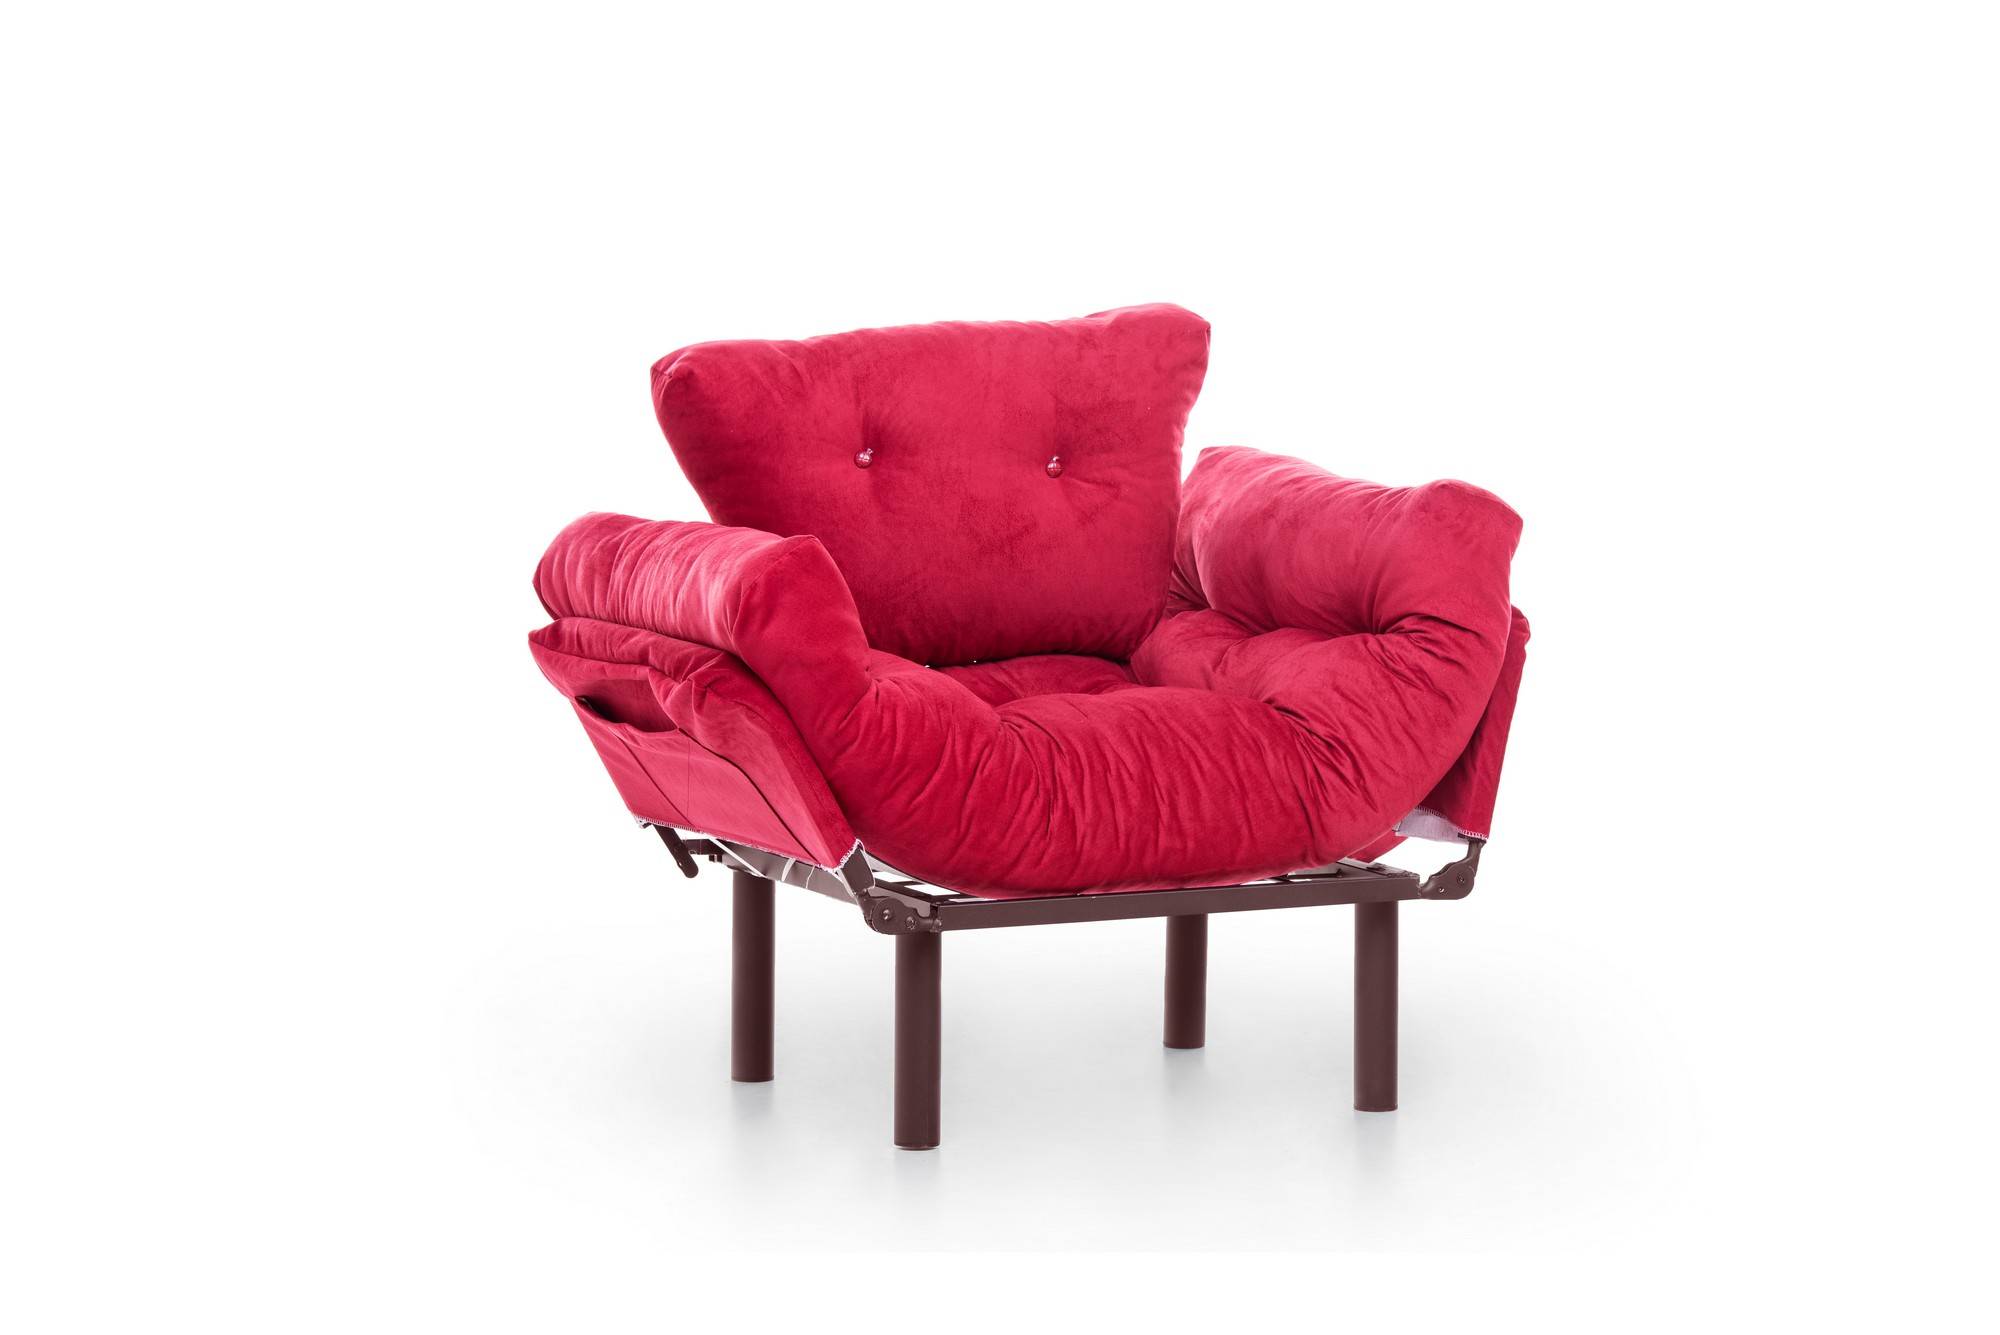 Wandlungsfähiger Sessel Tresa Stoff Rot